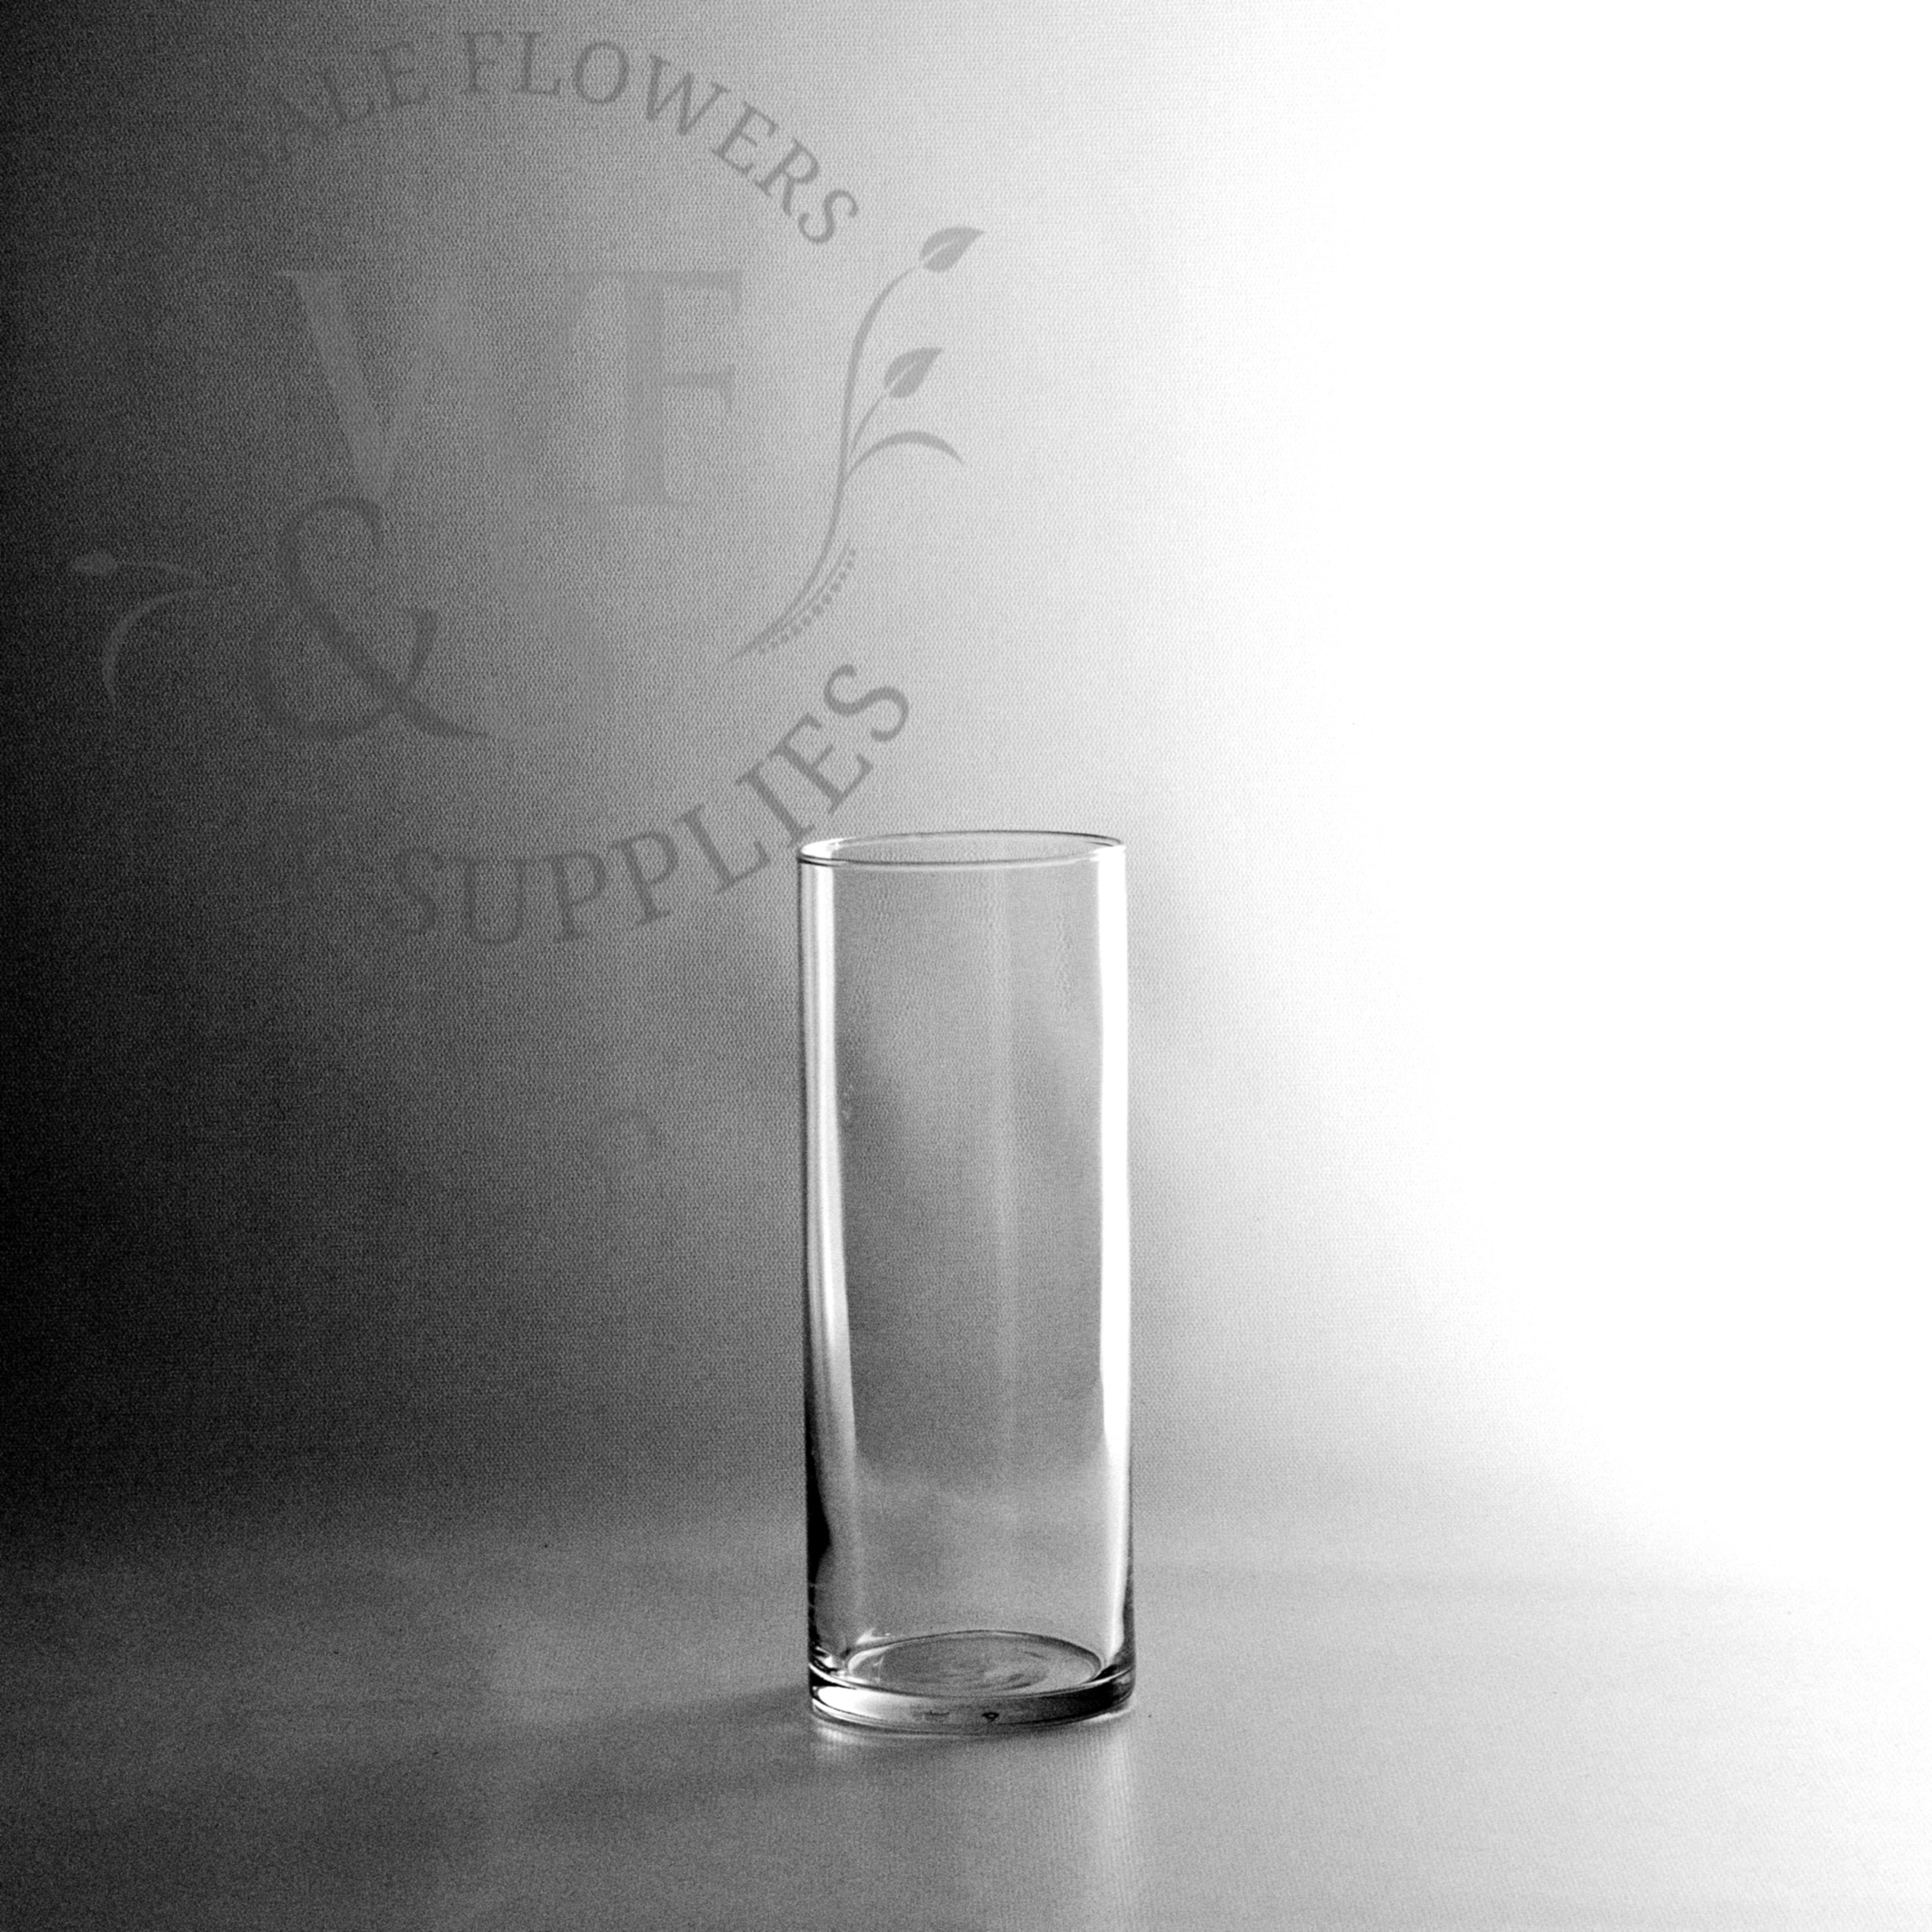 eiffel tower vases bulk wholesale of why you should not go to glass vases wholesale glass vases throughout crystal glass vases wholesale elegant cylinder vases wholesale